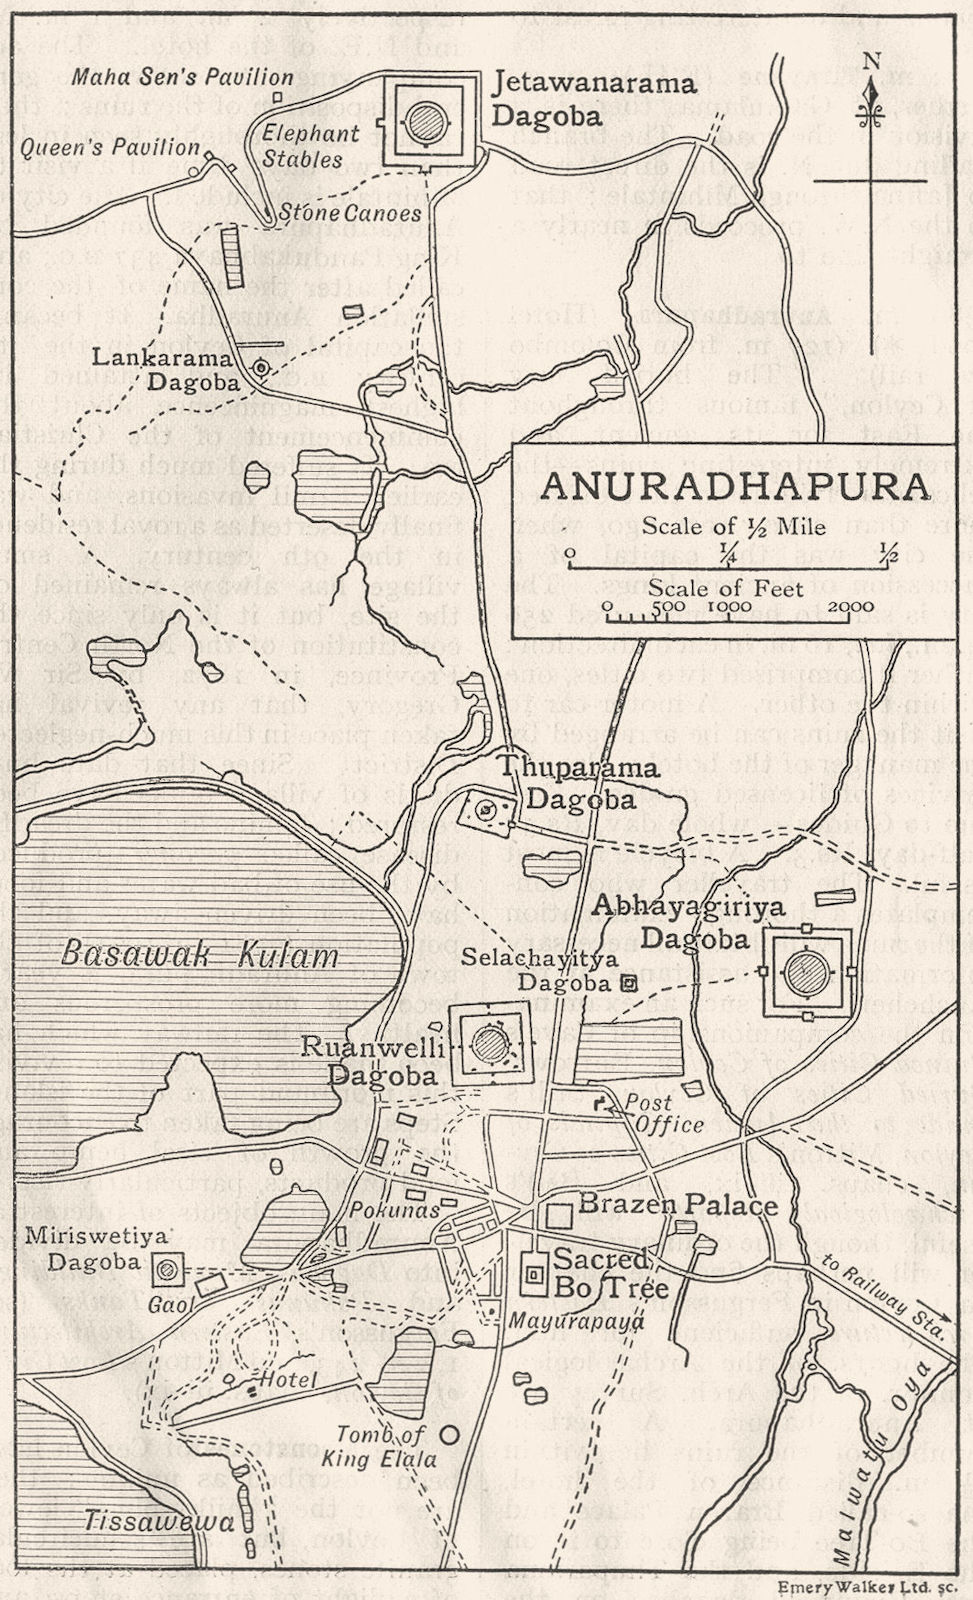 CEYLON. Anuradhapura sketch map. Sri Lanka. Dagobas. British India 1924